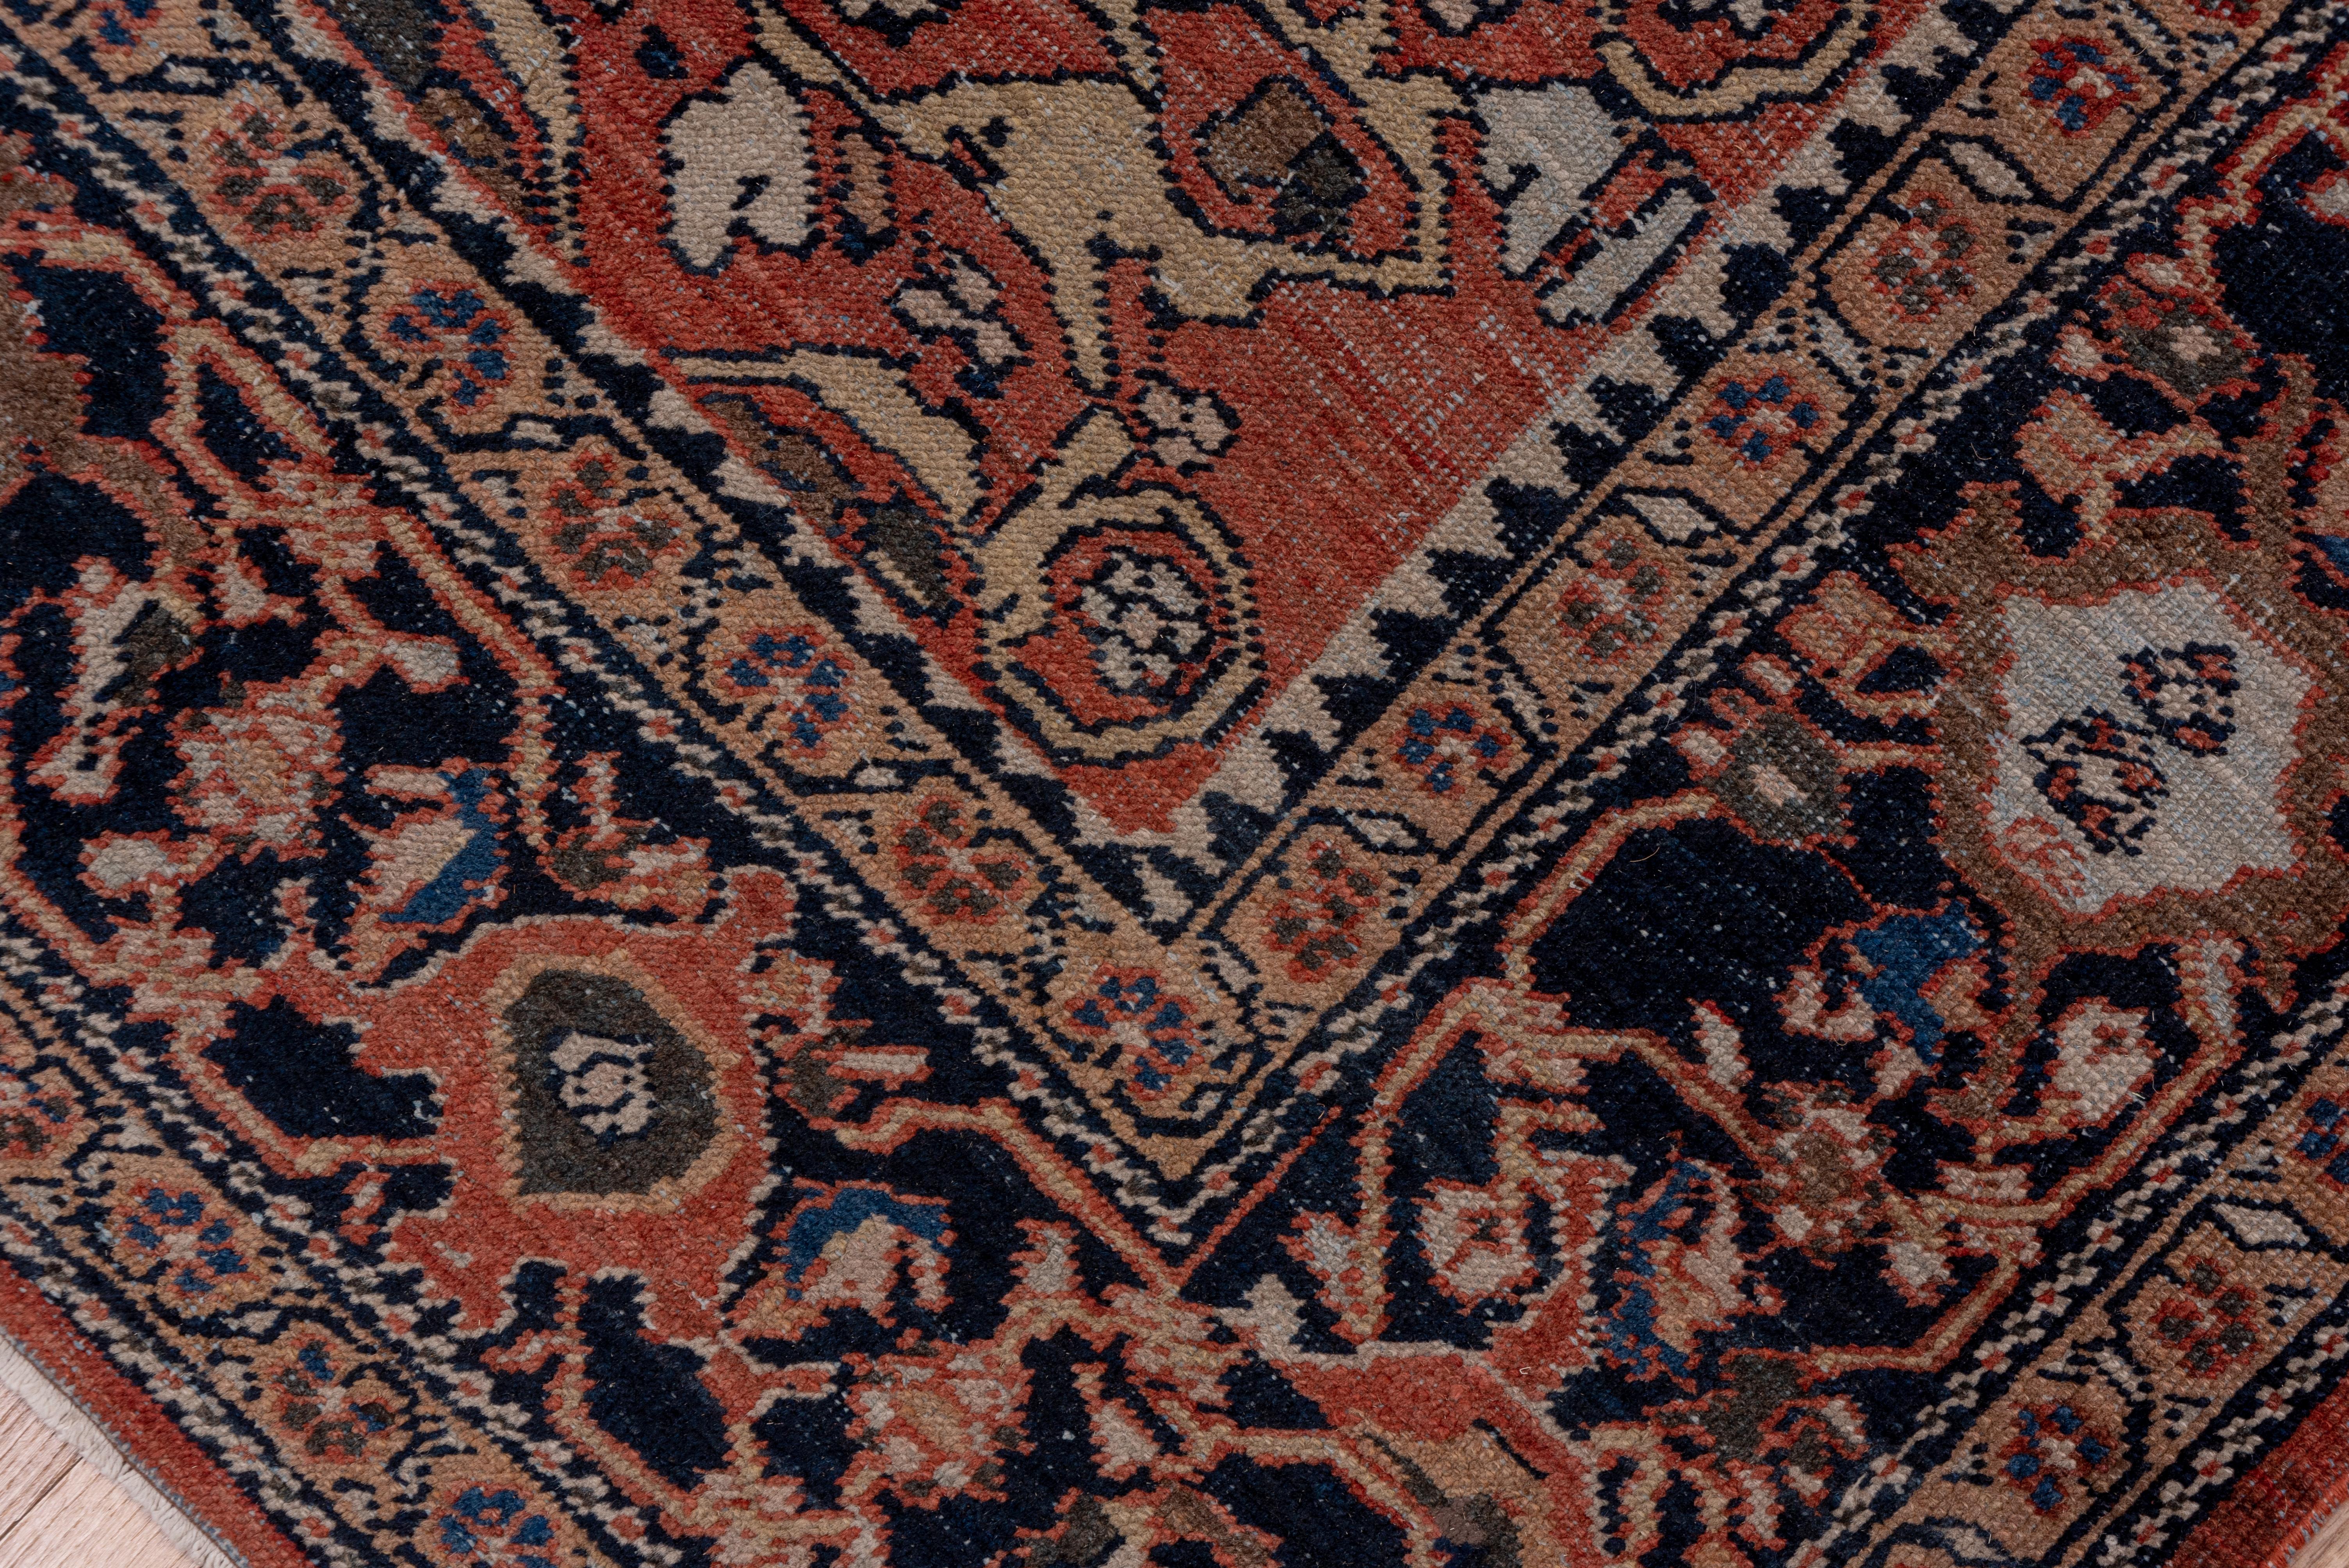 Antique Red Persian Mahal Carpet 1